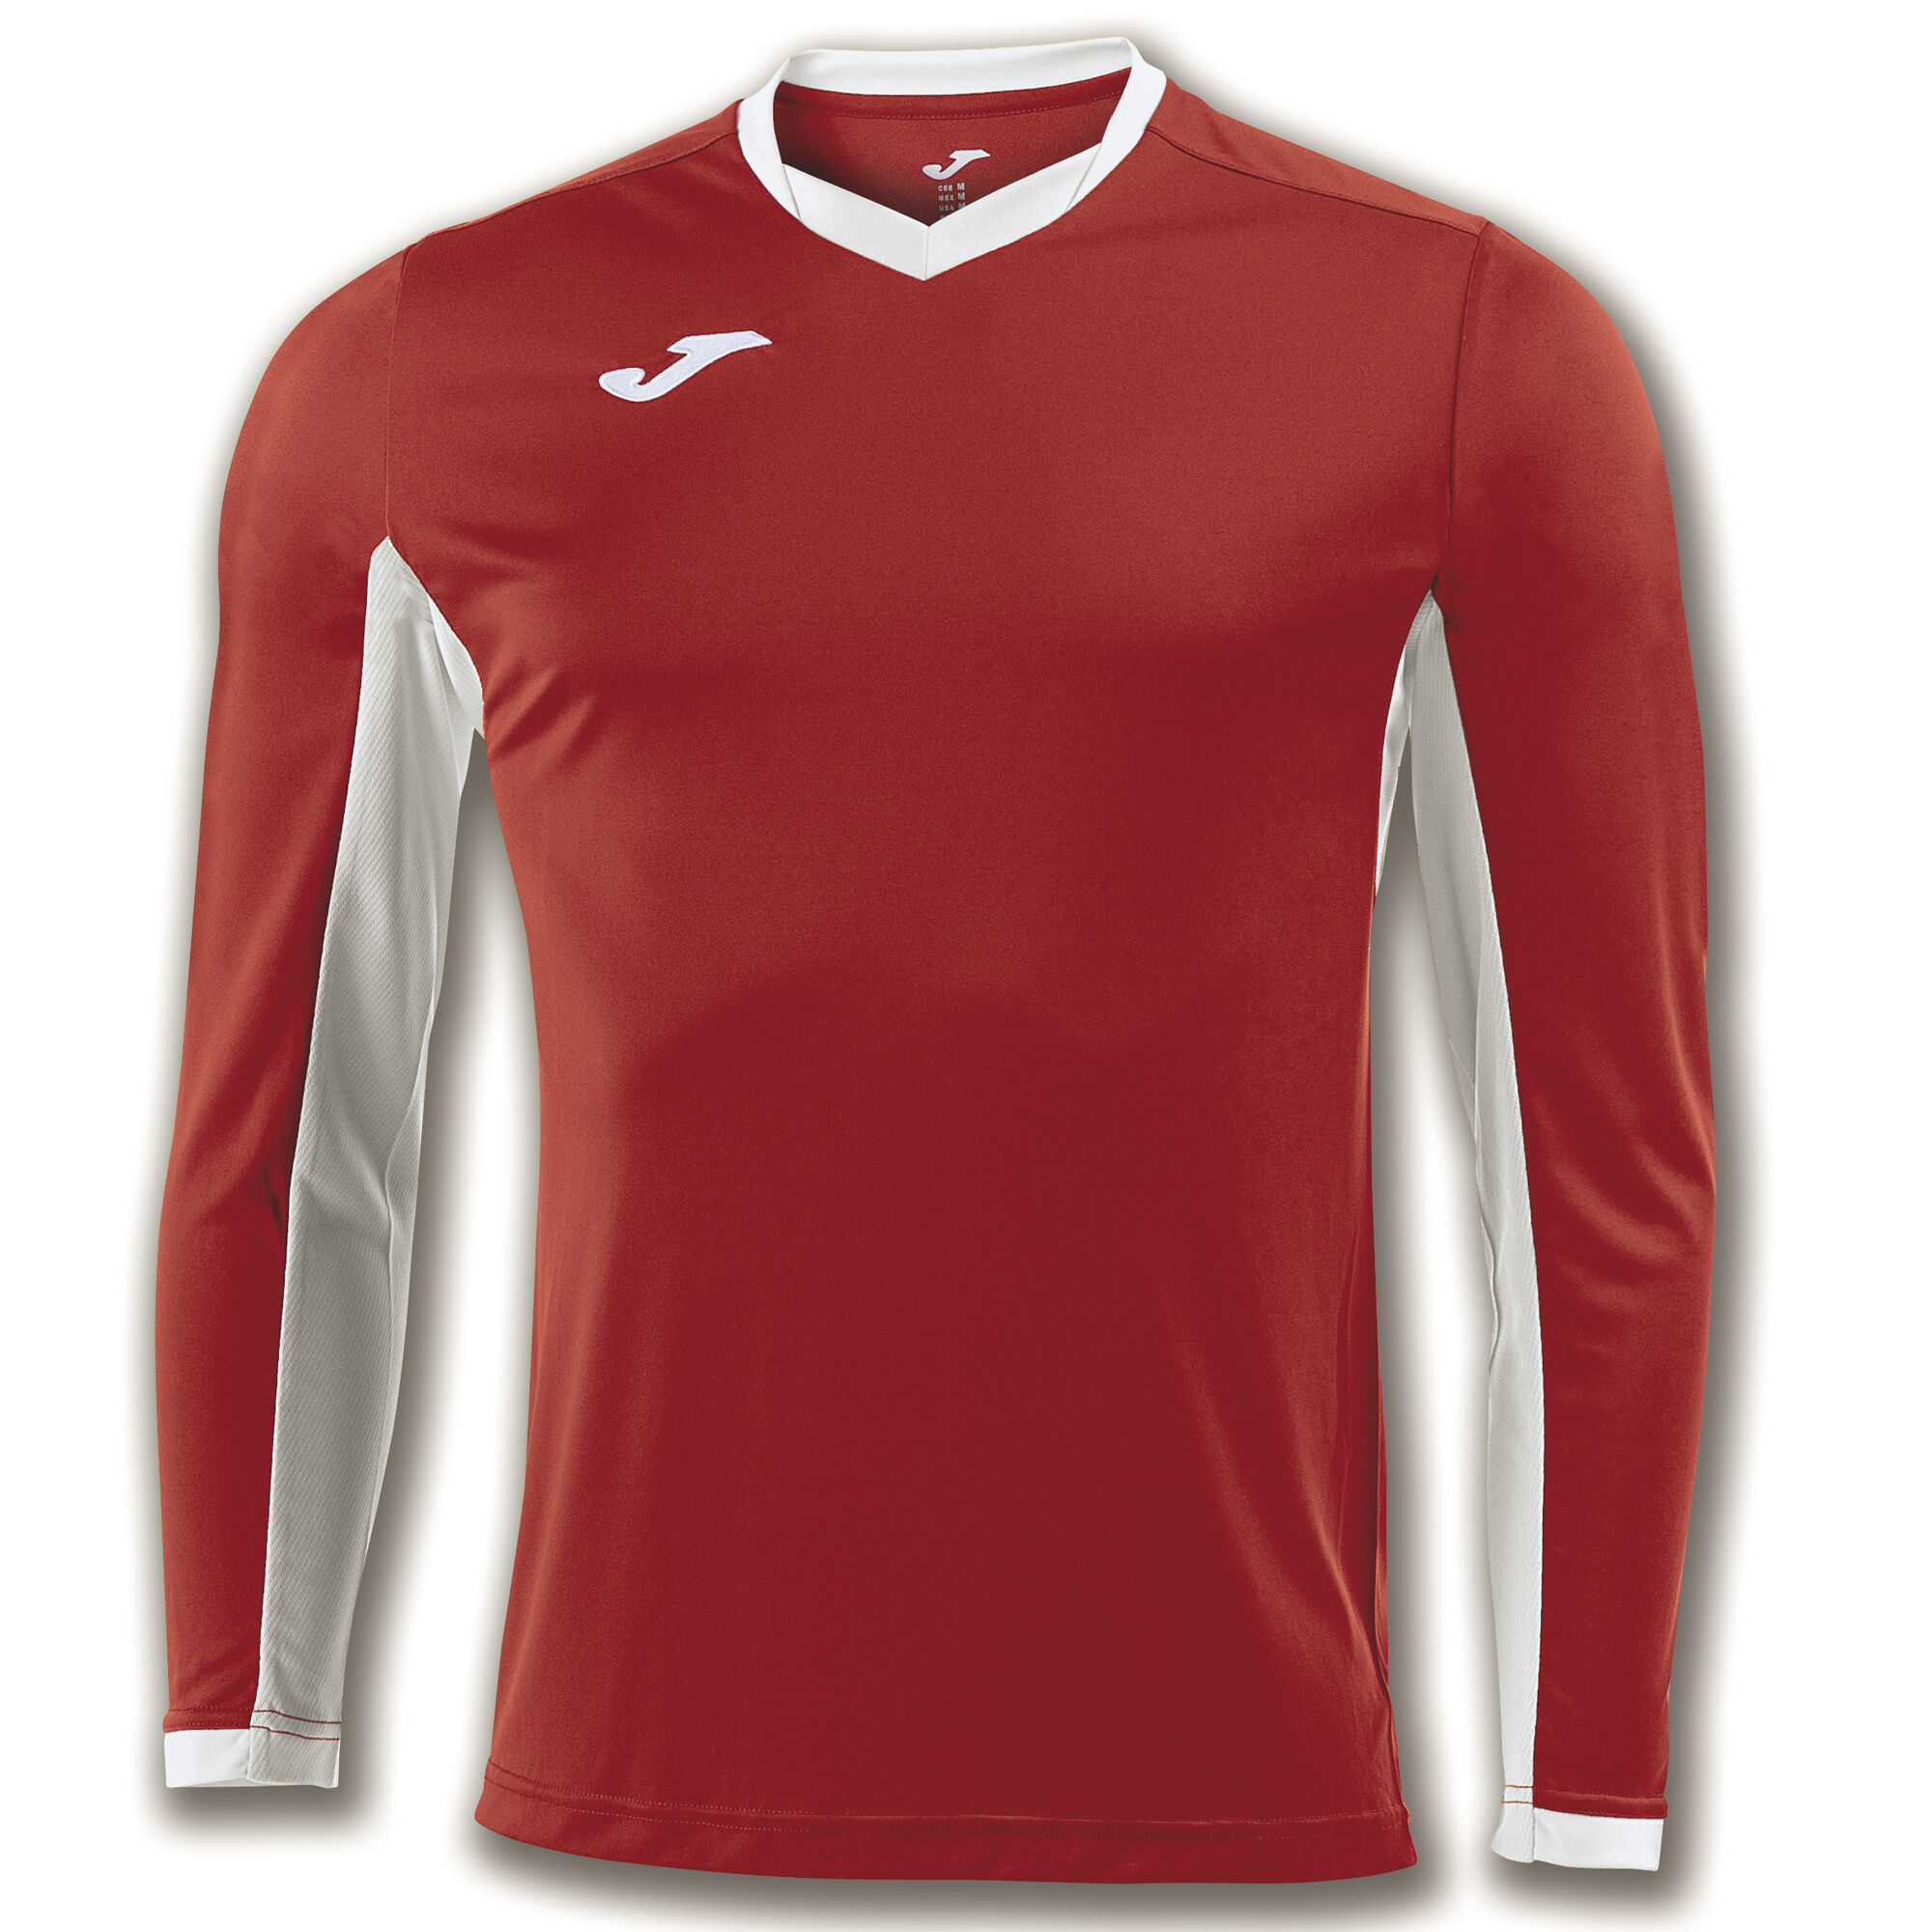 Camiseta manga larga hombre Championship IV rojo blanco